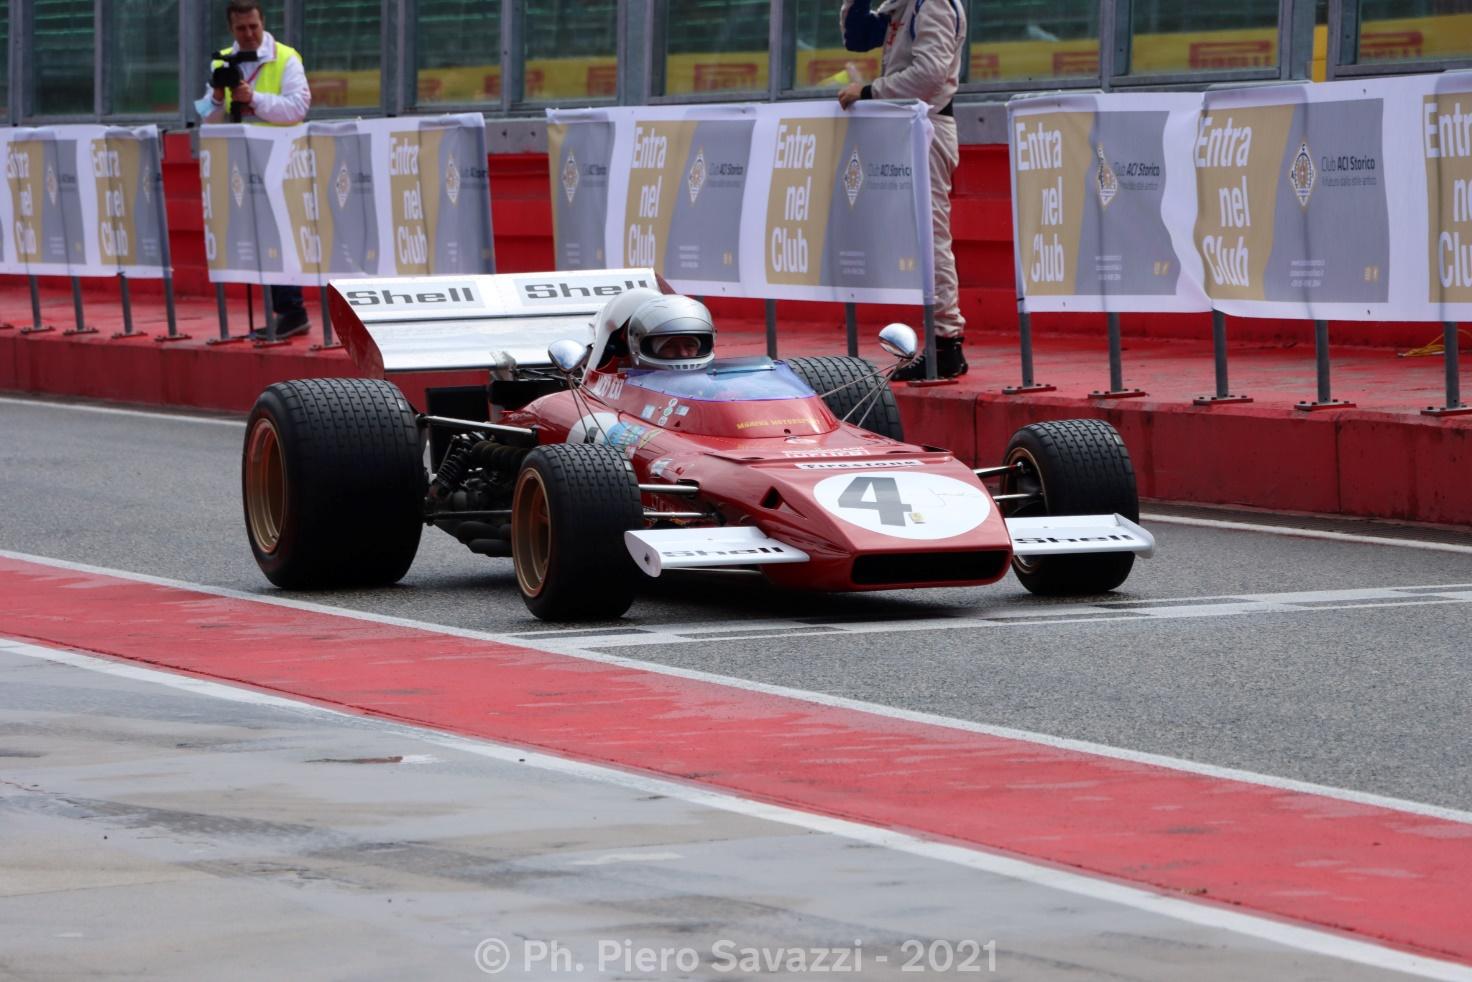 Jacky Ickx's Ferrari F1 car.